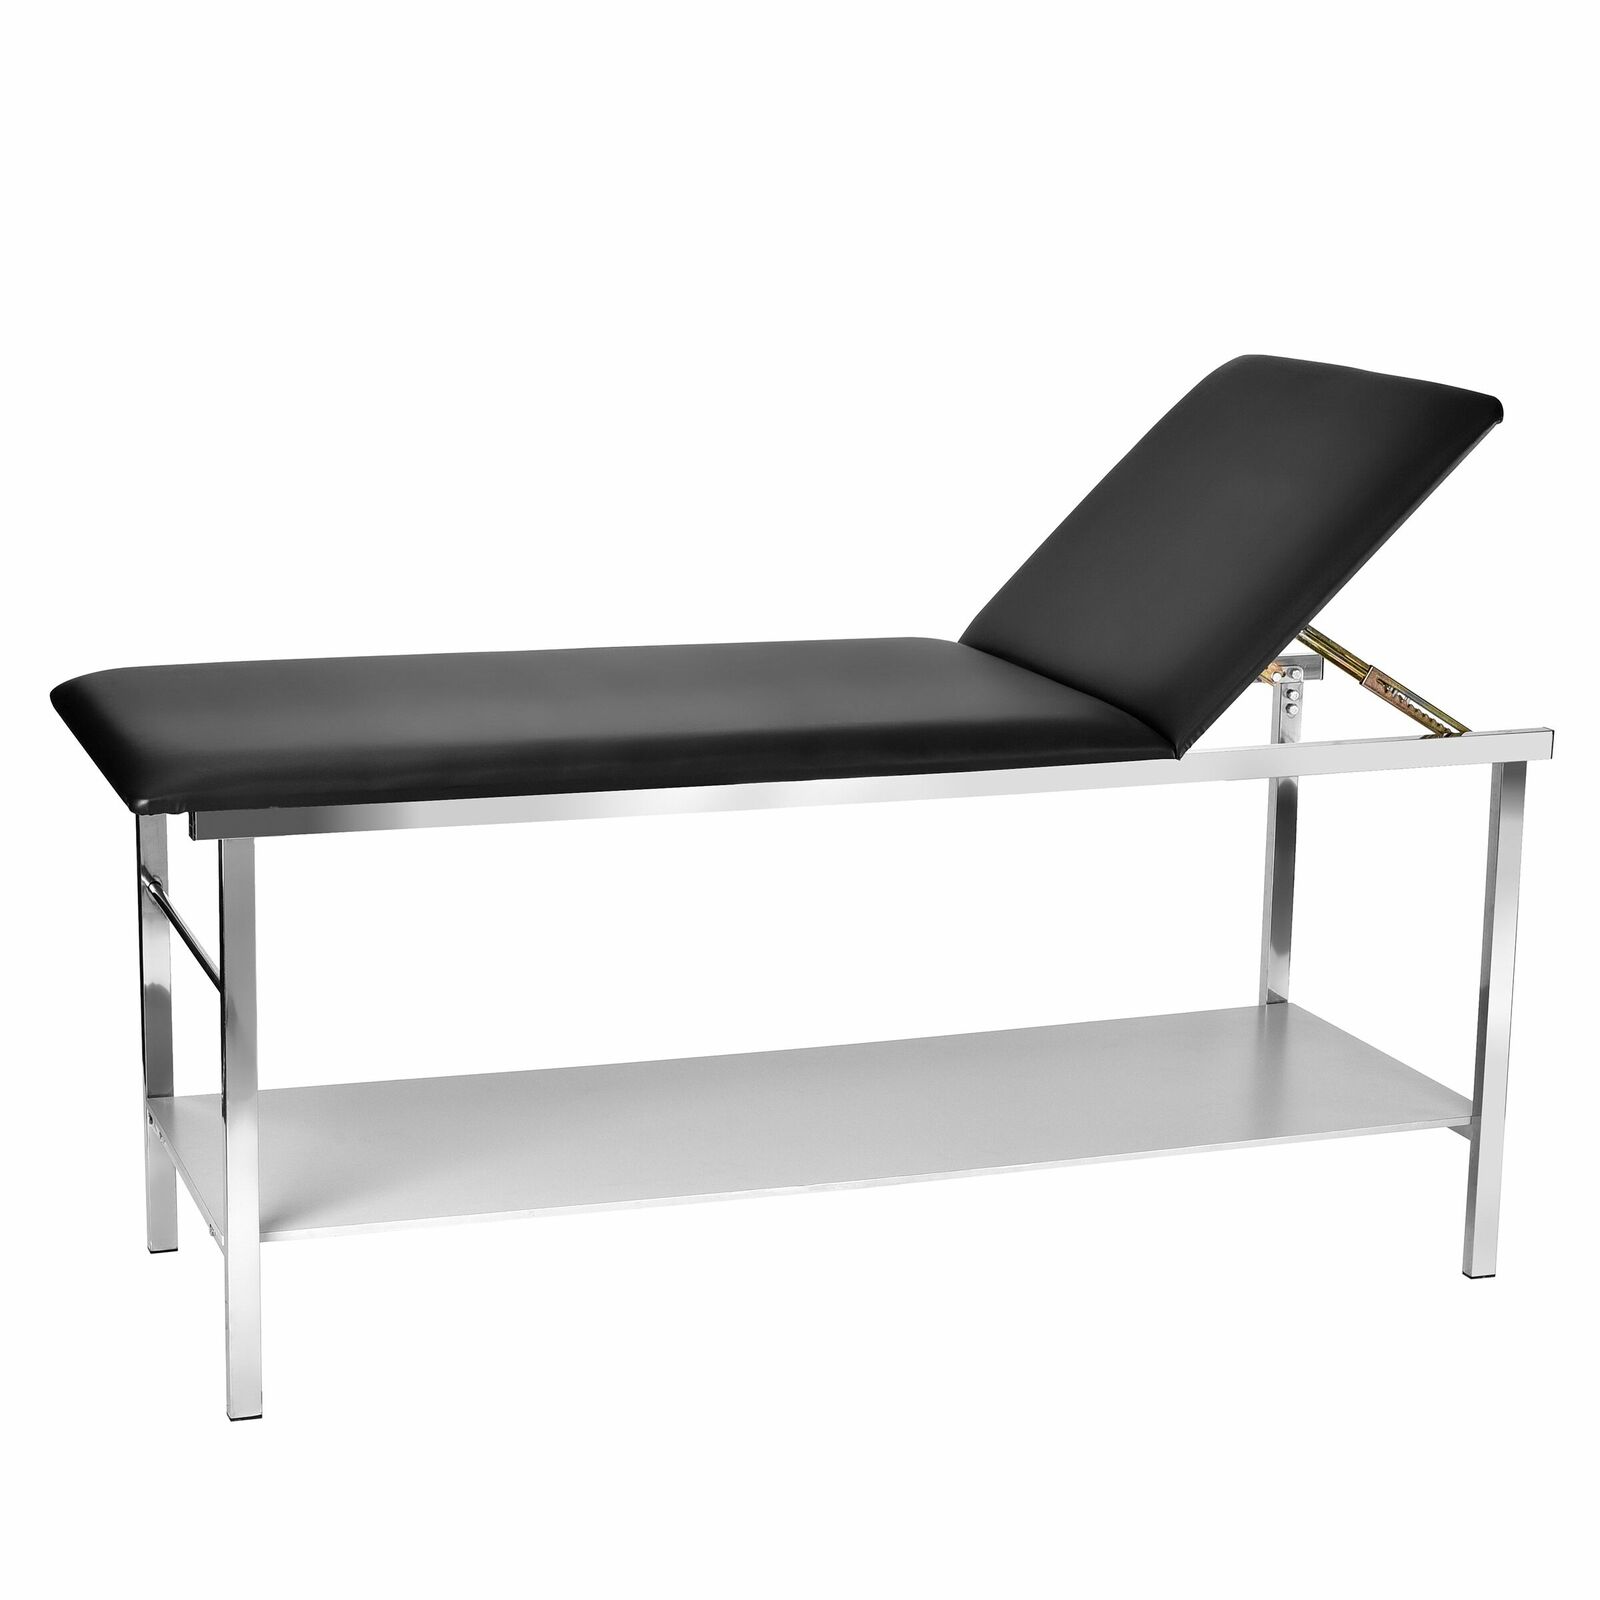 Adirmed Black Adjustable Steel Exam Treatment Table With Shelf & Dispenser